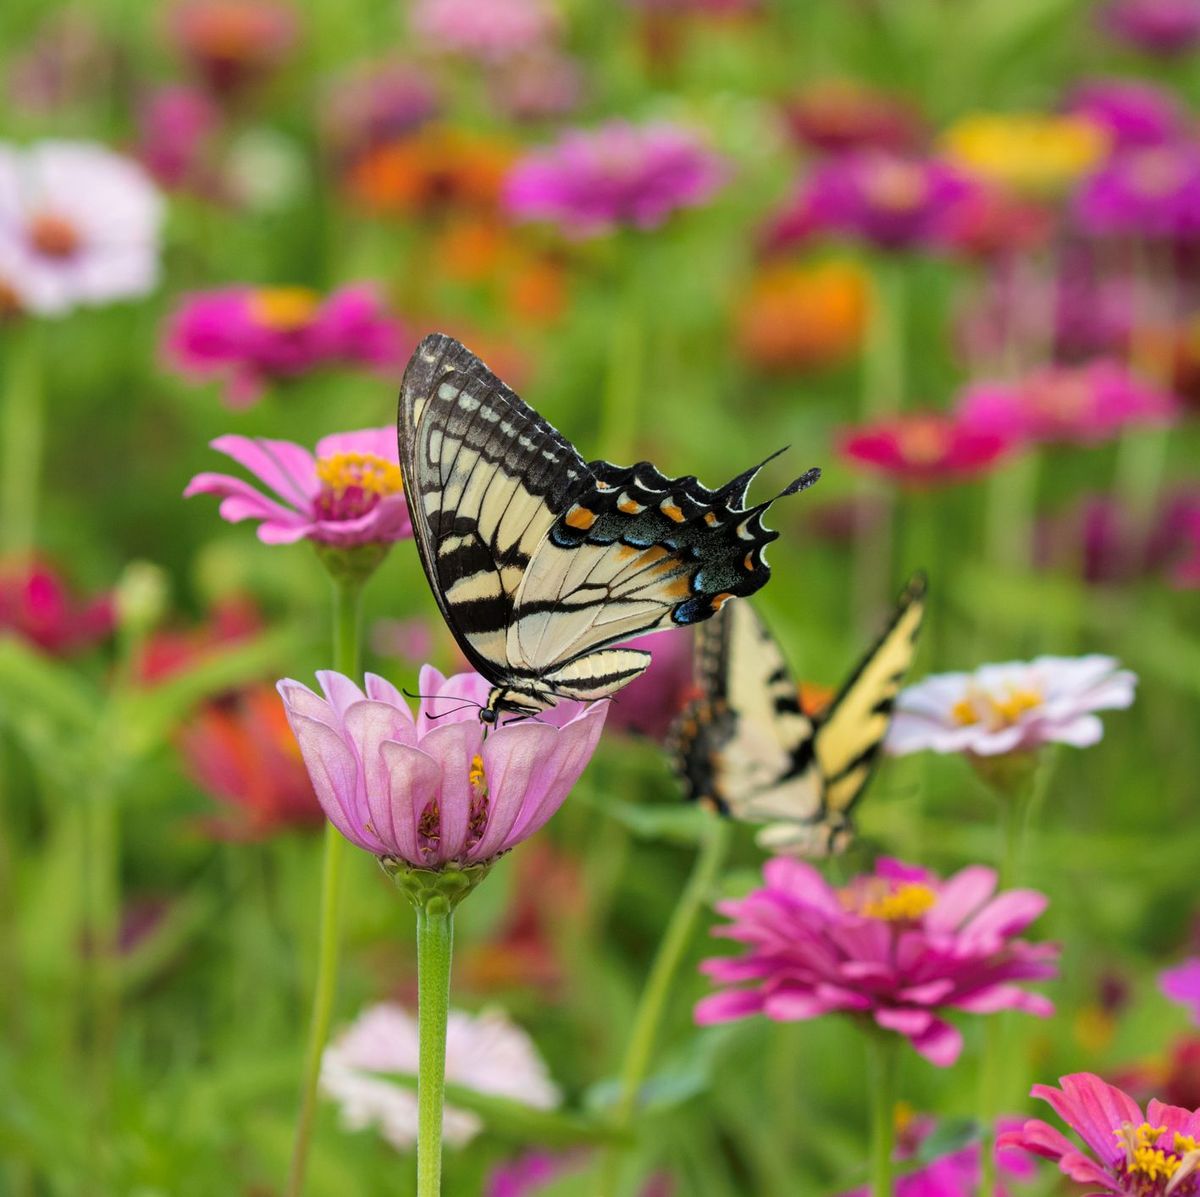 Why Flowering Plants Need Pollinators